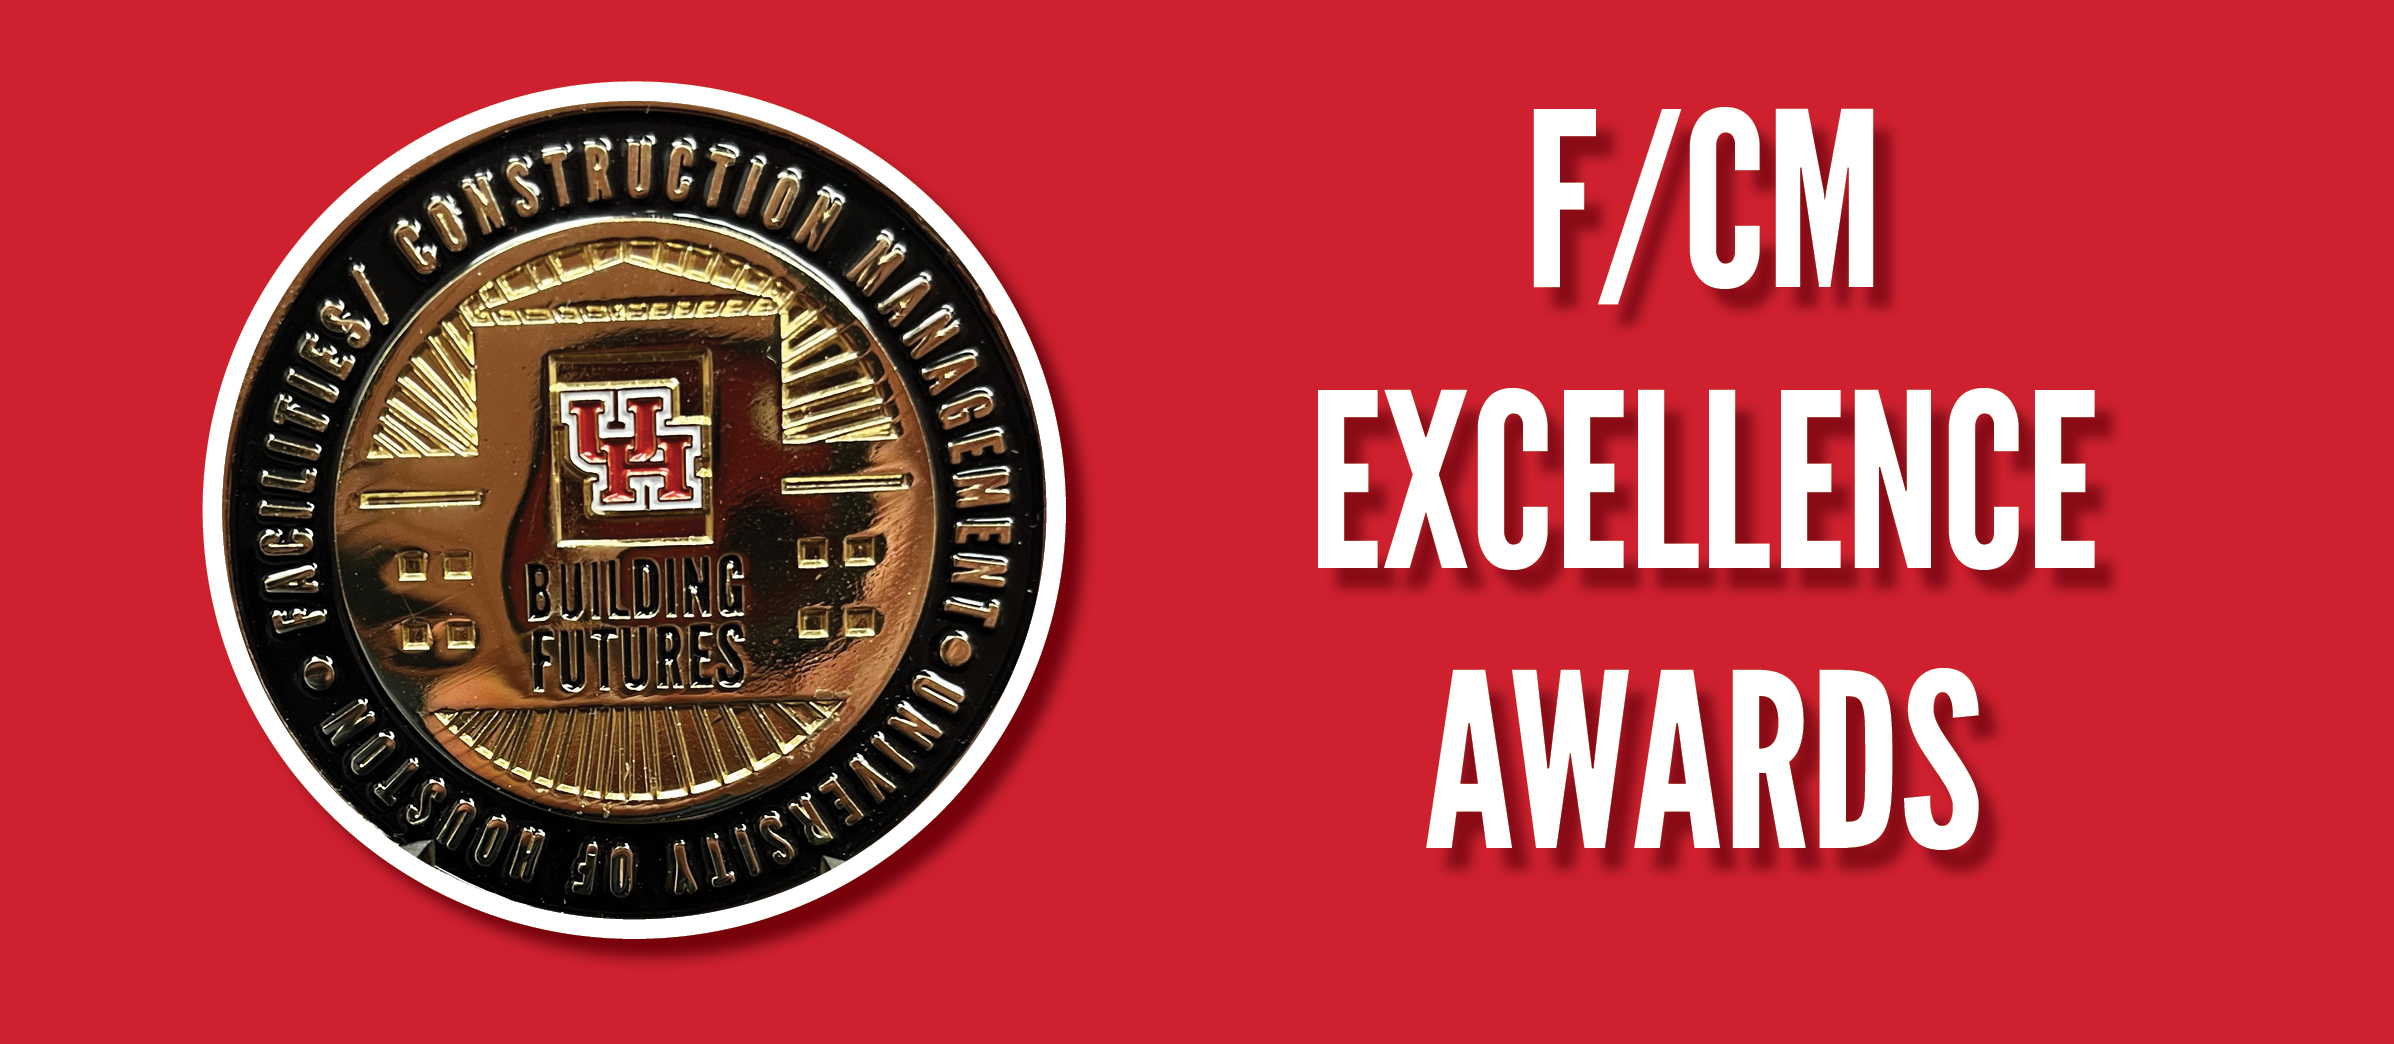 F/CM Excellence Award